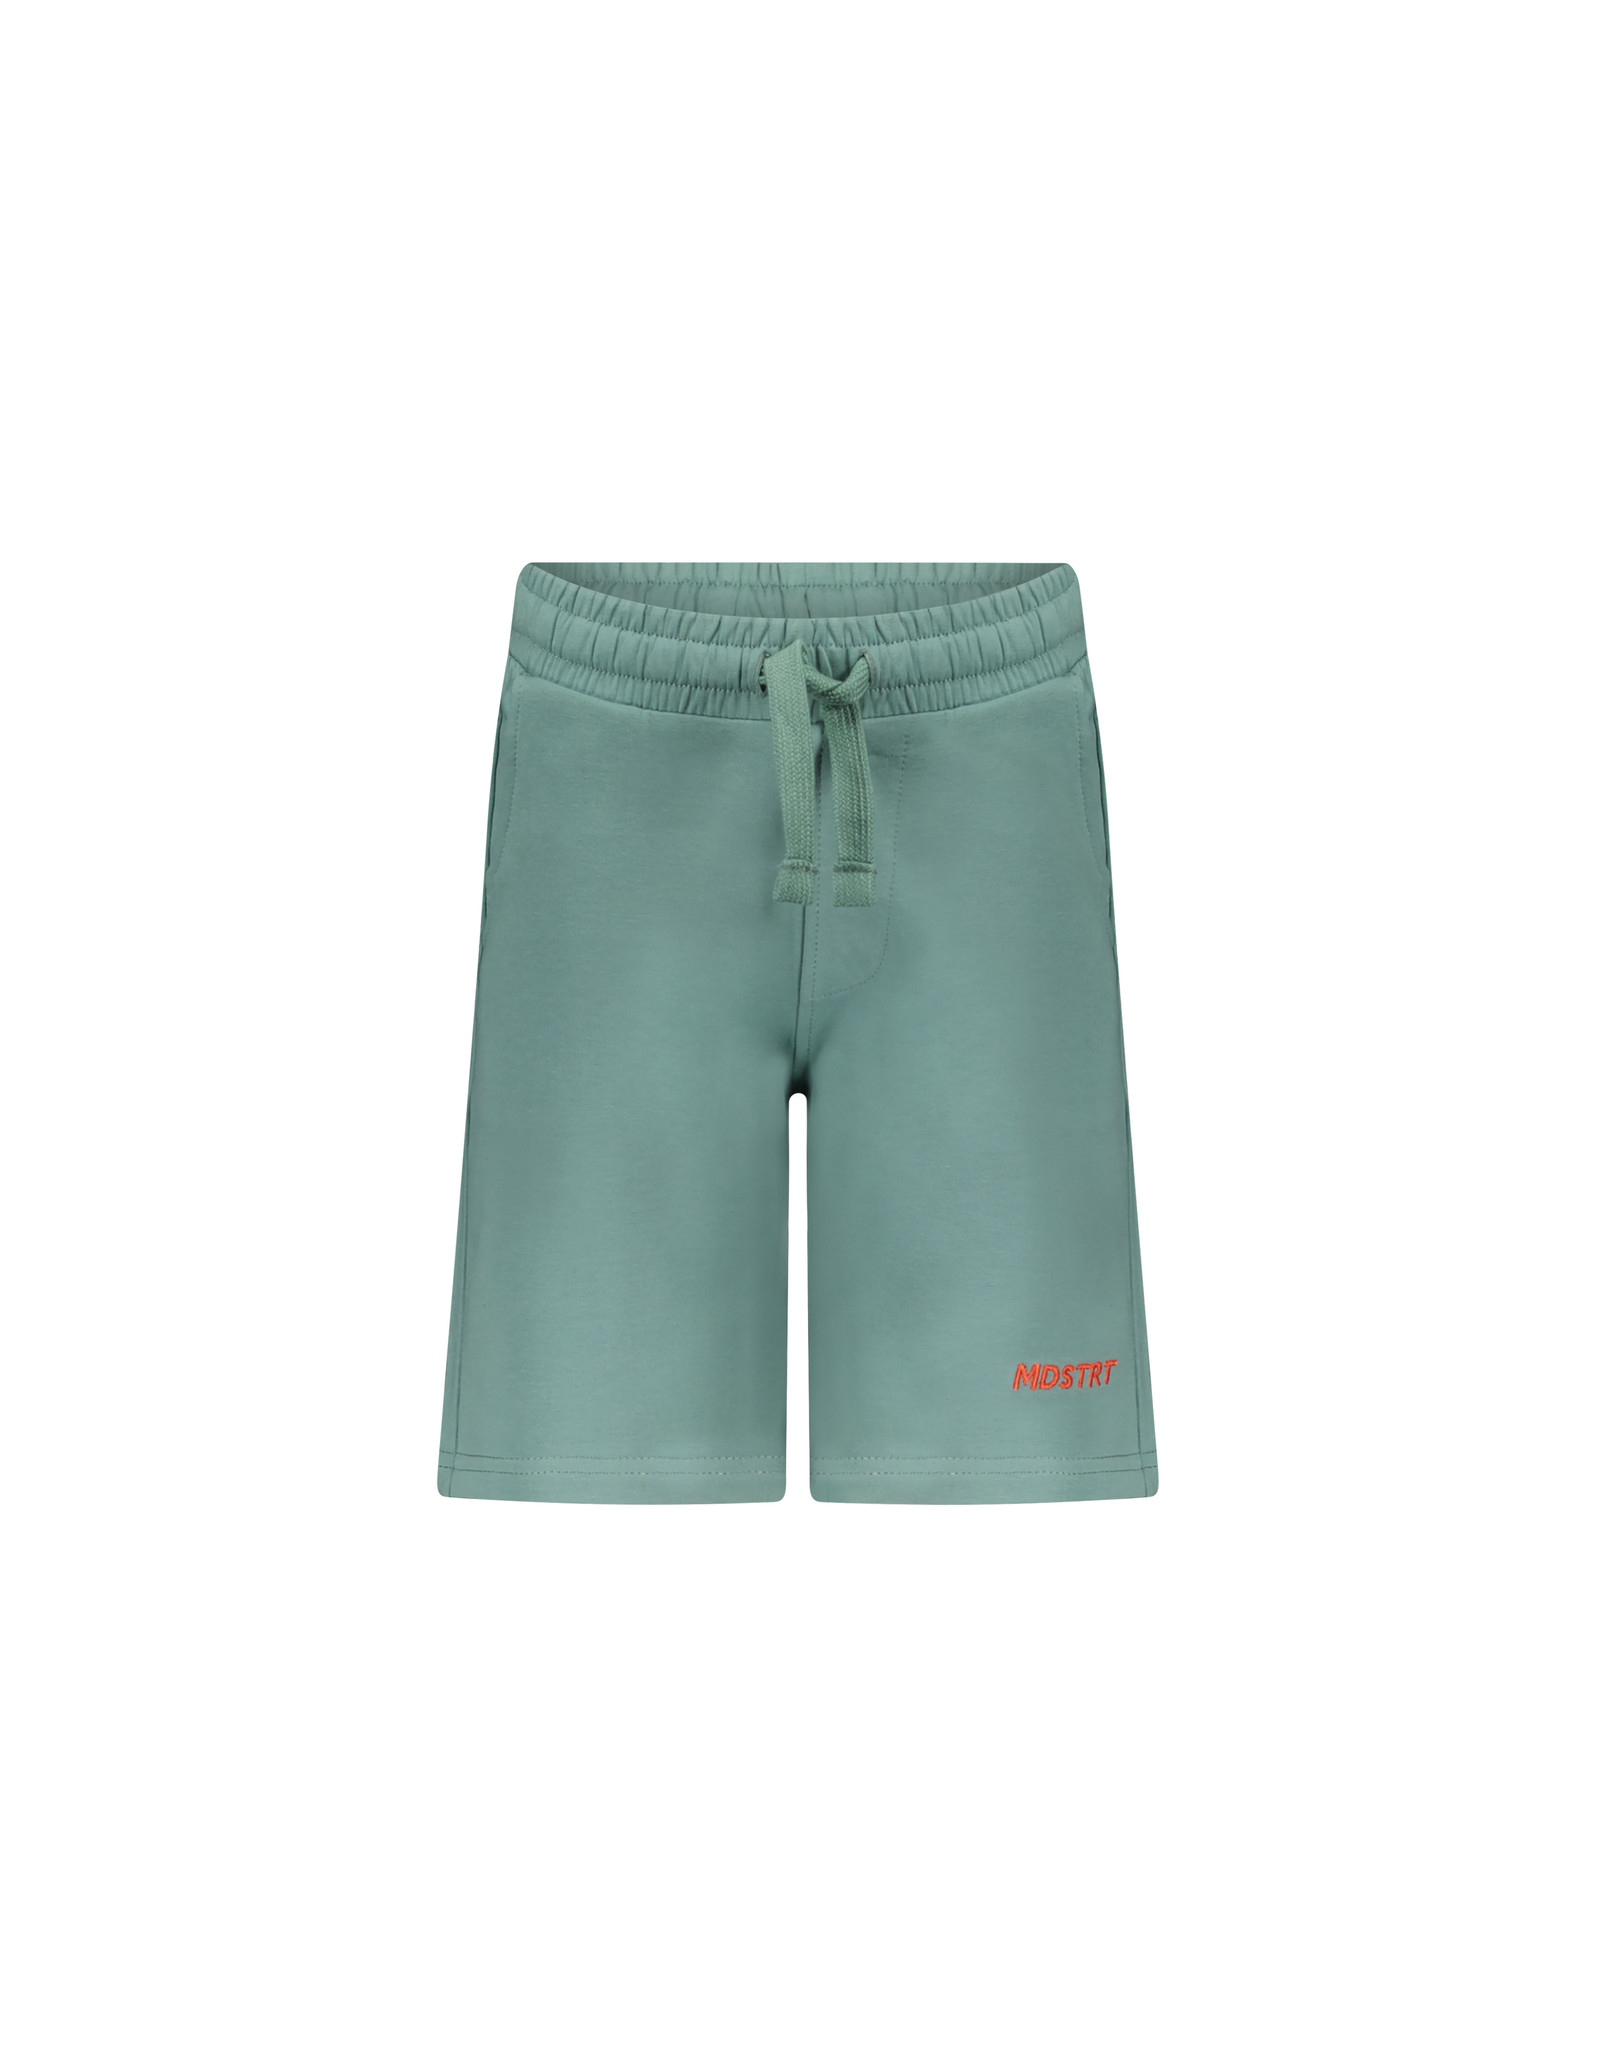 Moodstreet Sweat shorts paradise green